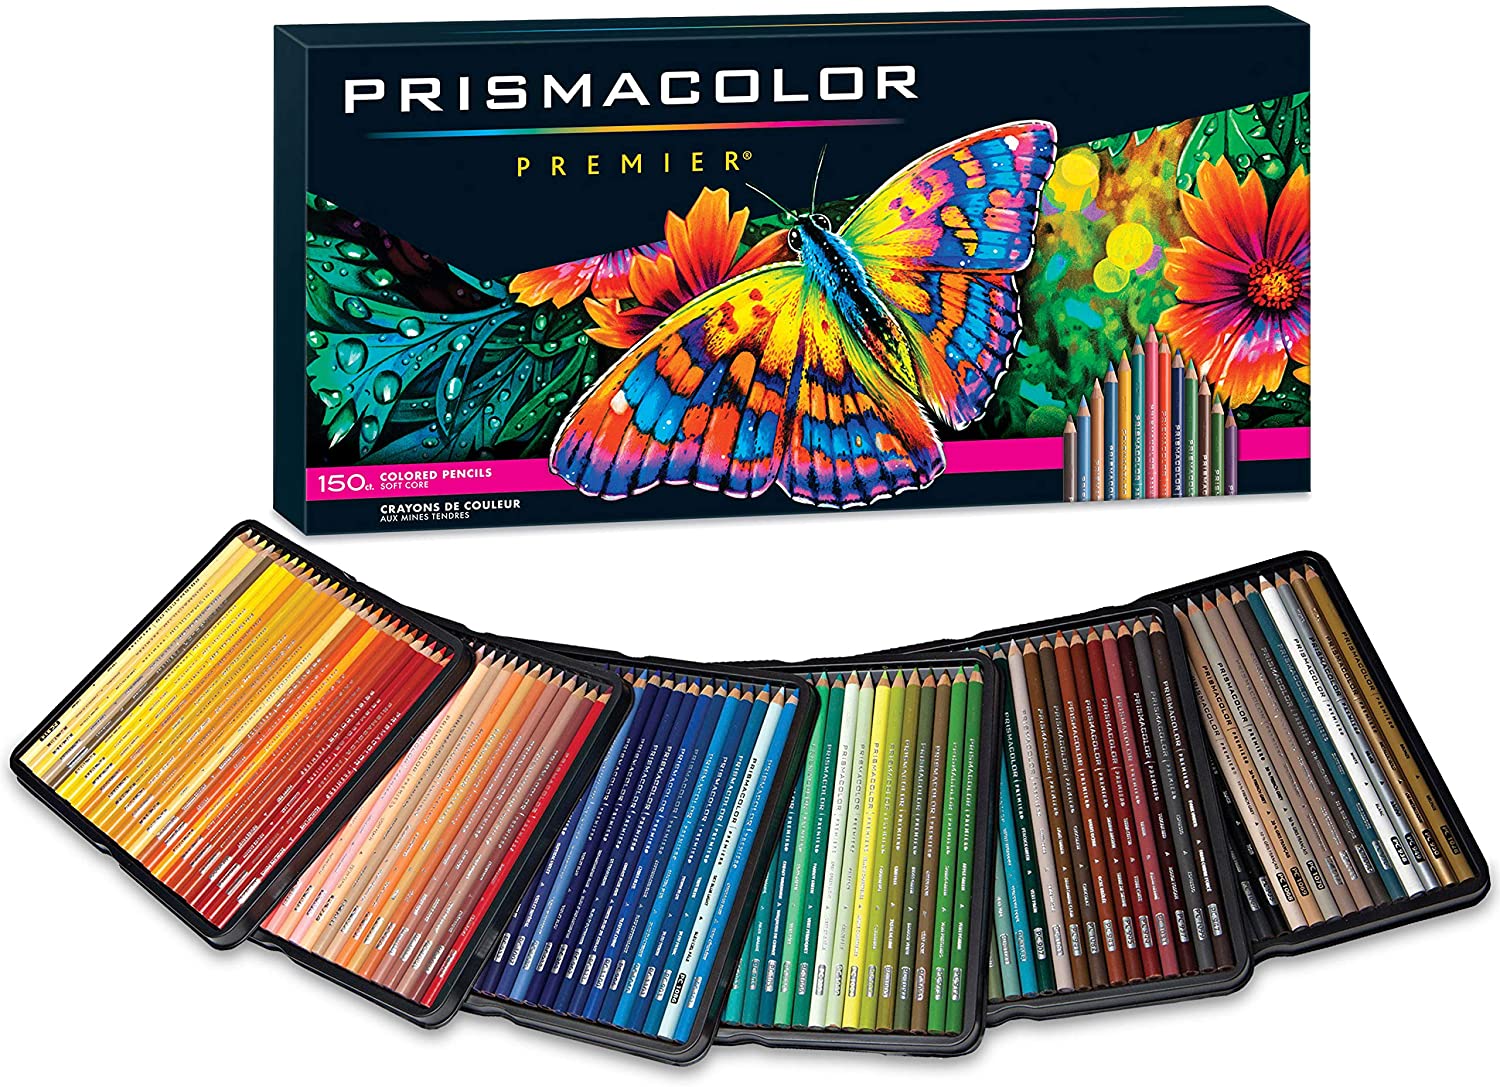 Sanford Prismacolor Premier Colored Pencils display